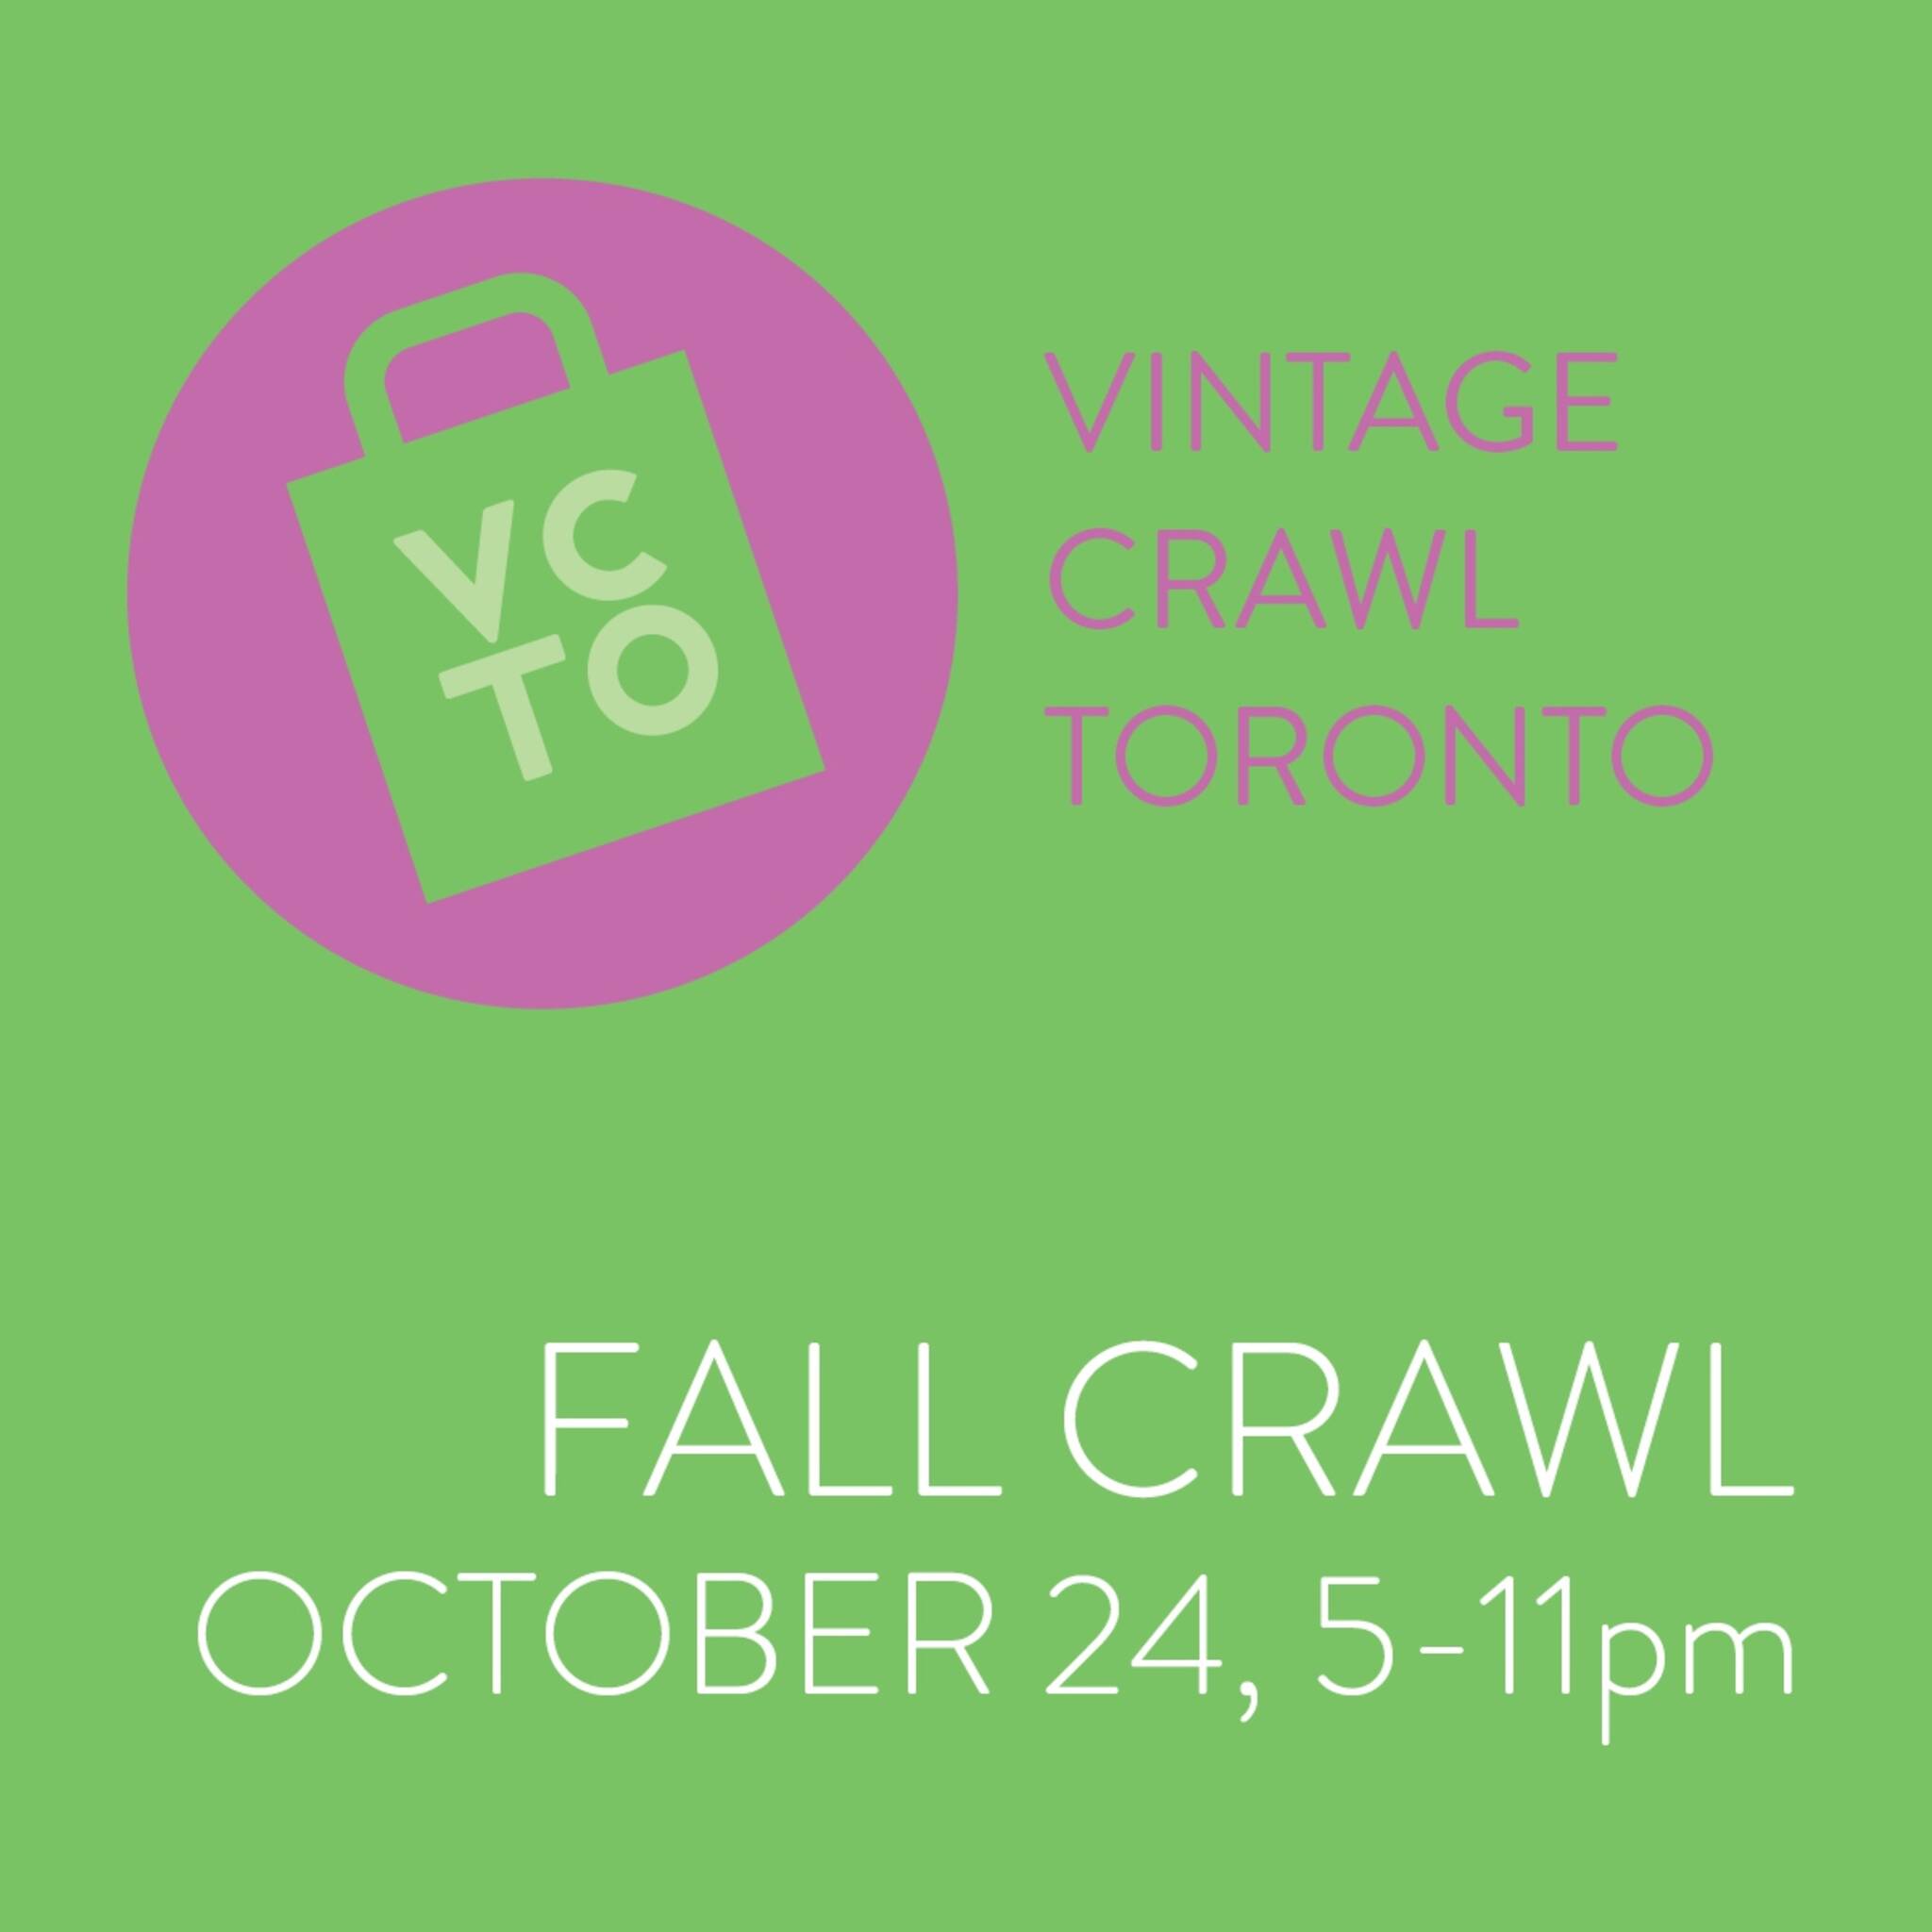 Vintage Crawl Toronto Fall Crawl